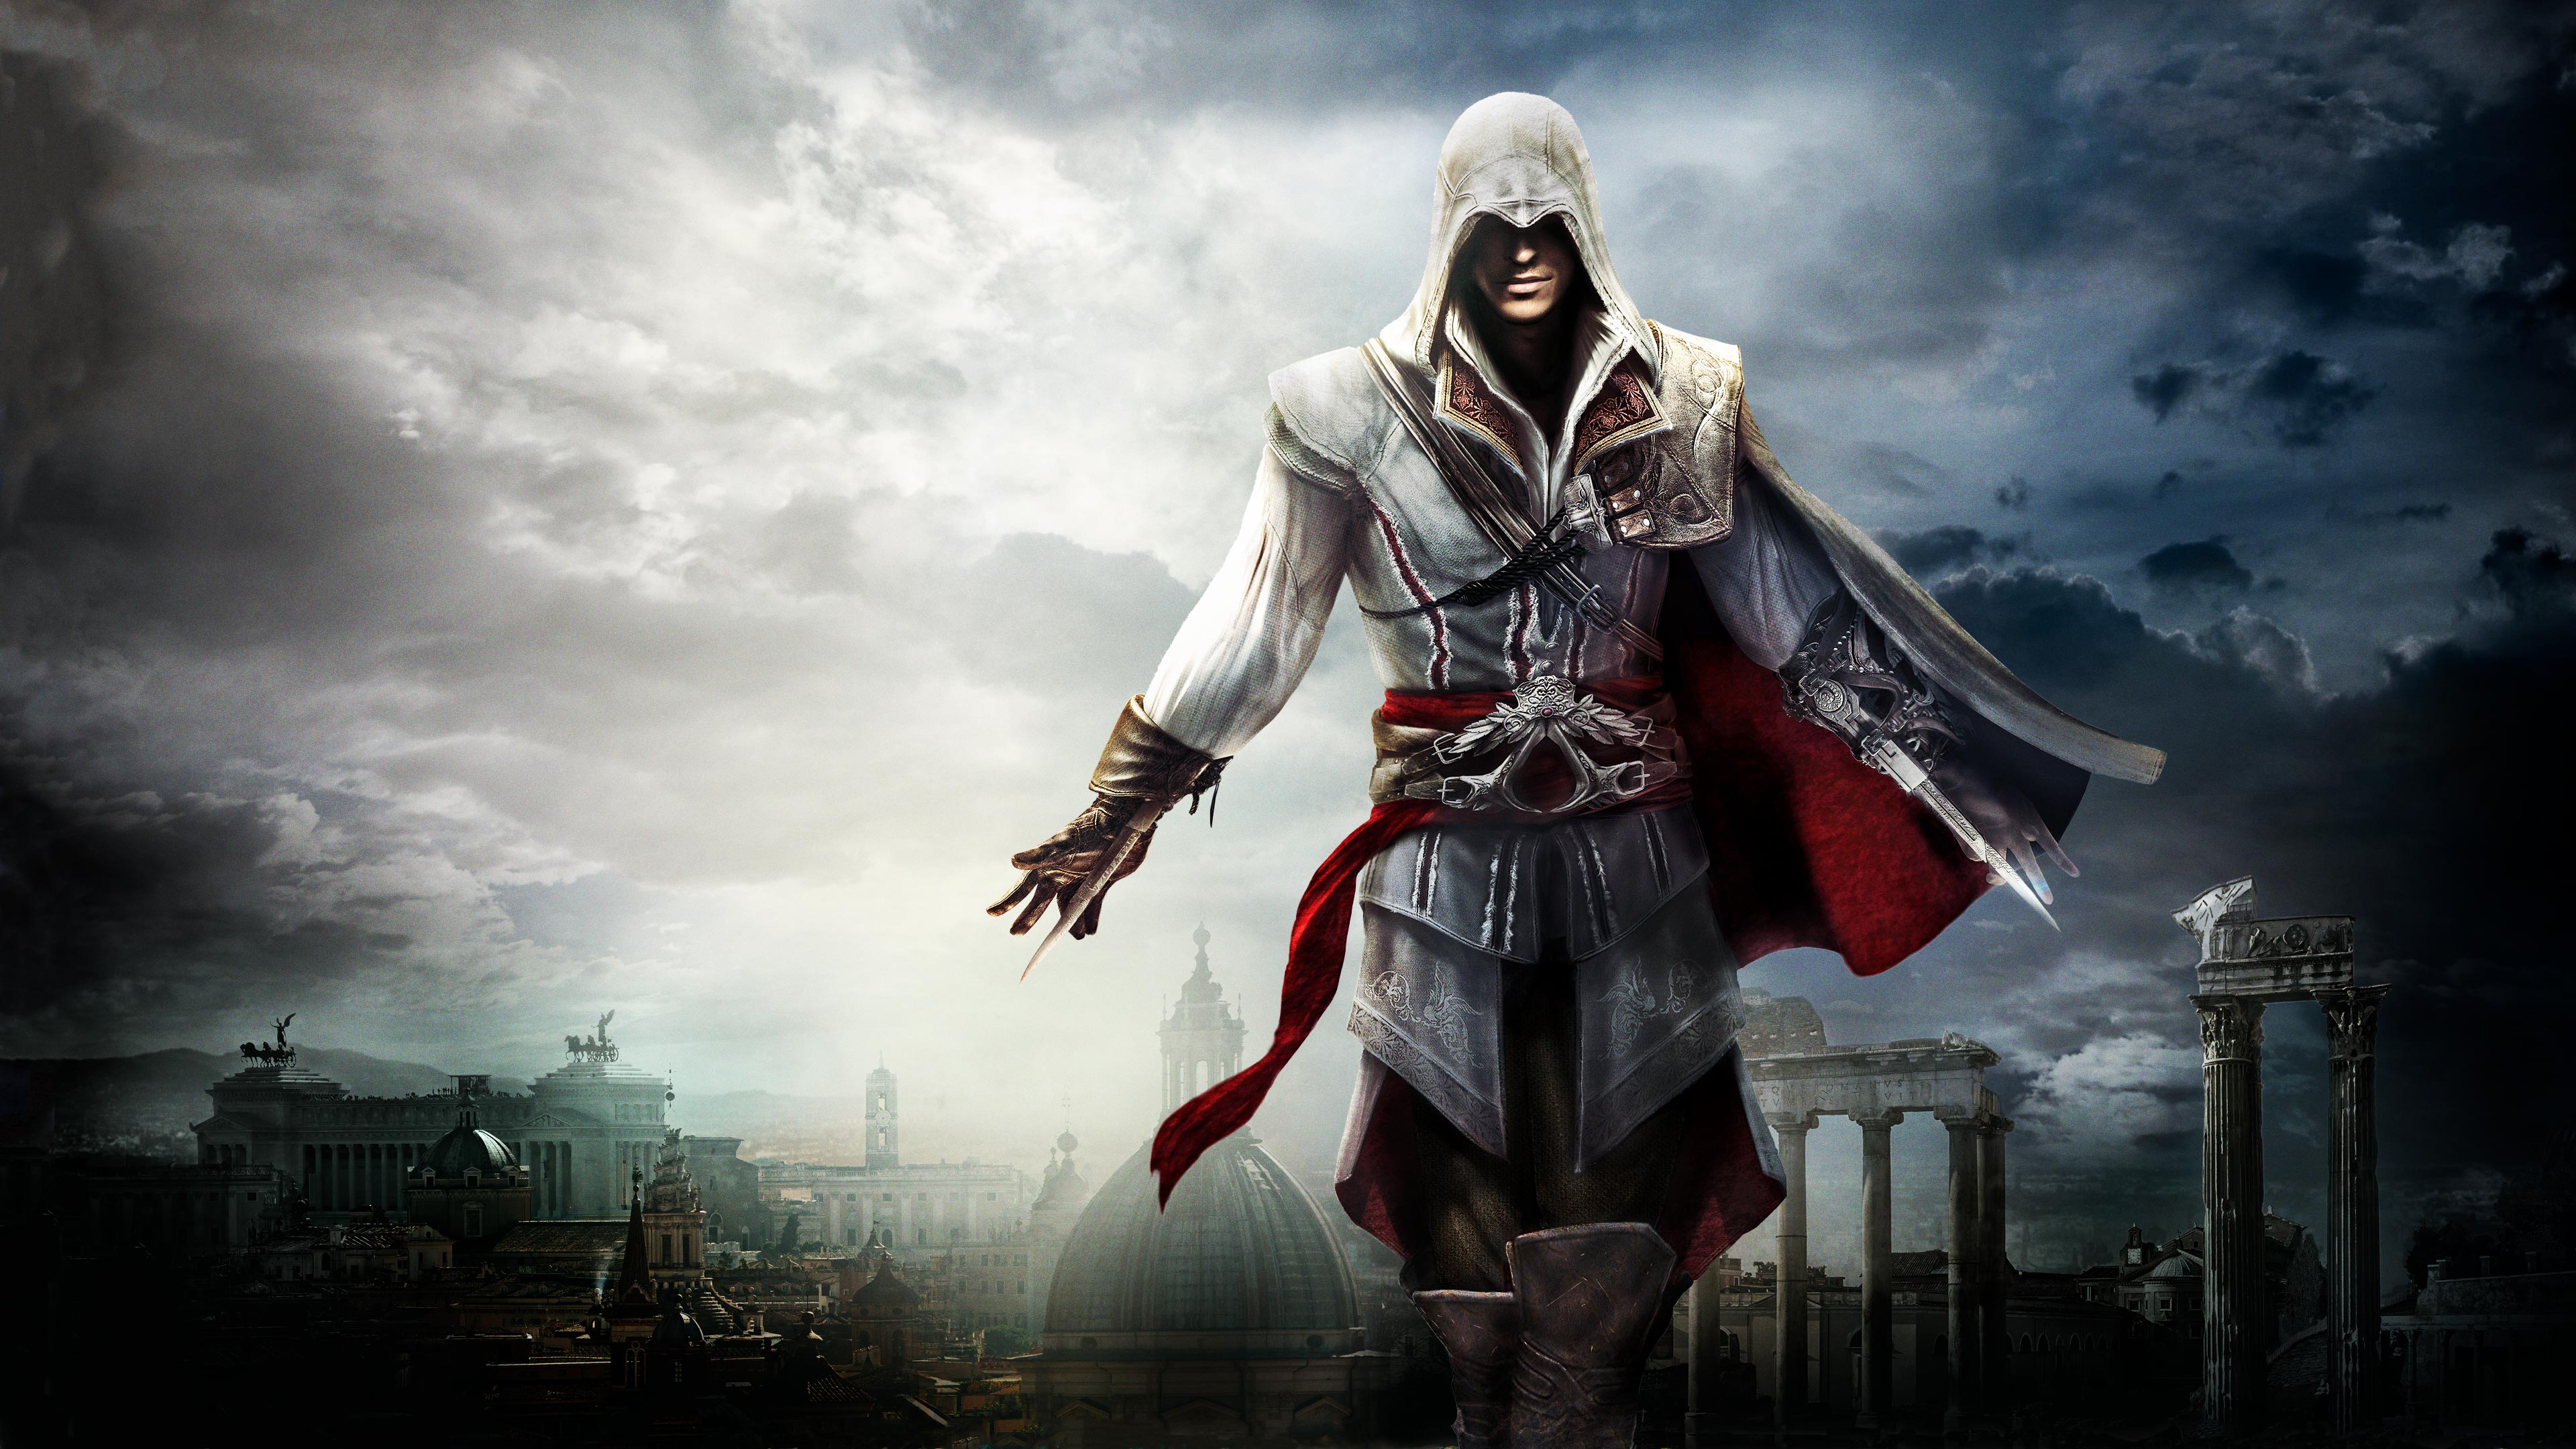 Download free Assassin's Creed Iii Hd Wallpaper Wallpaper - MrWallpaper.com